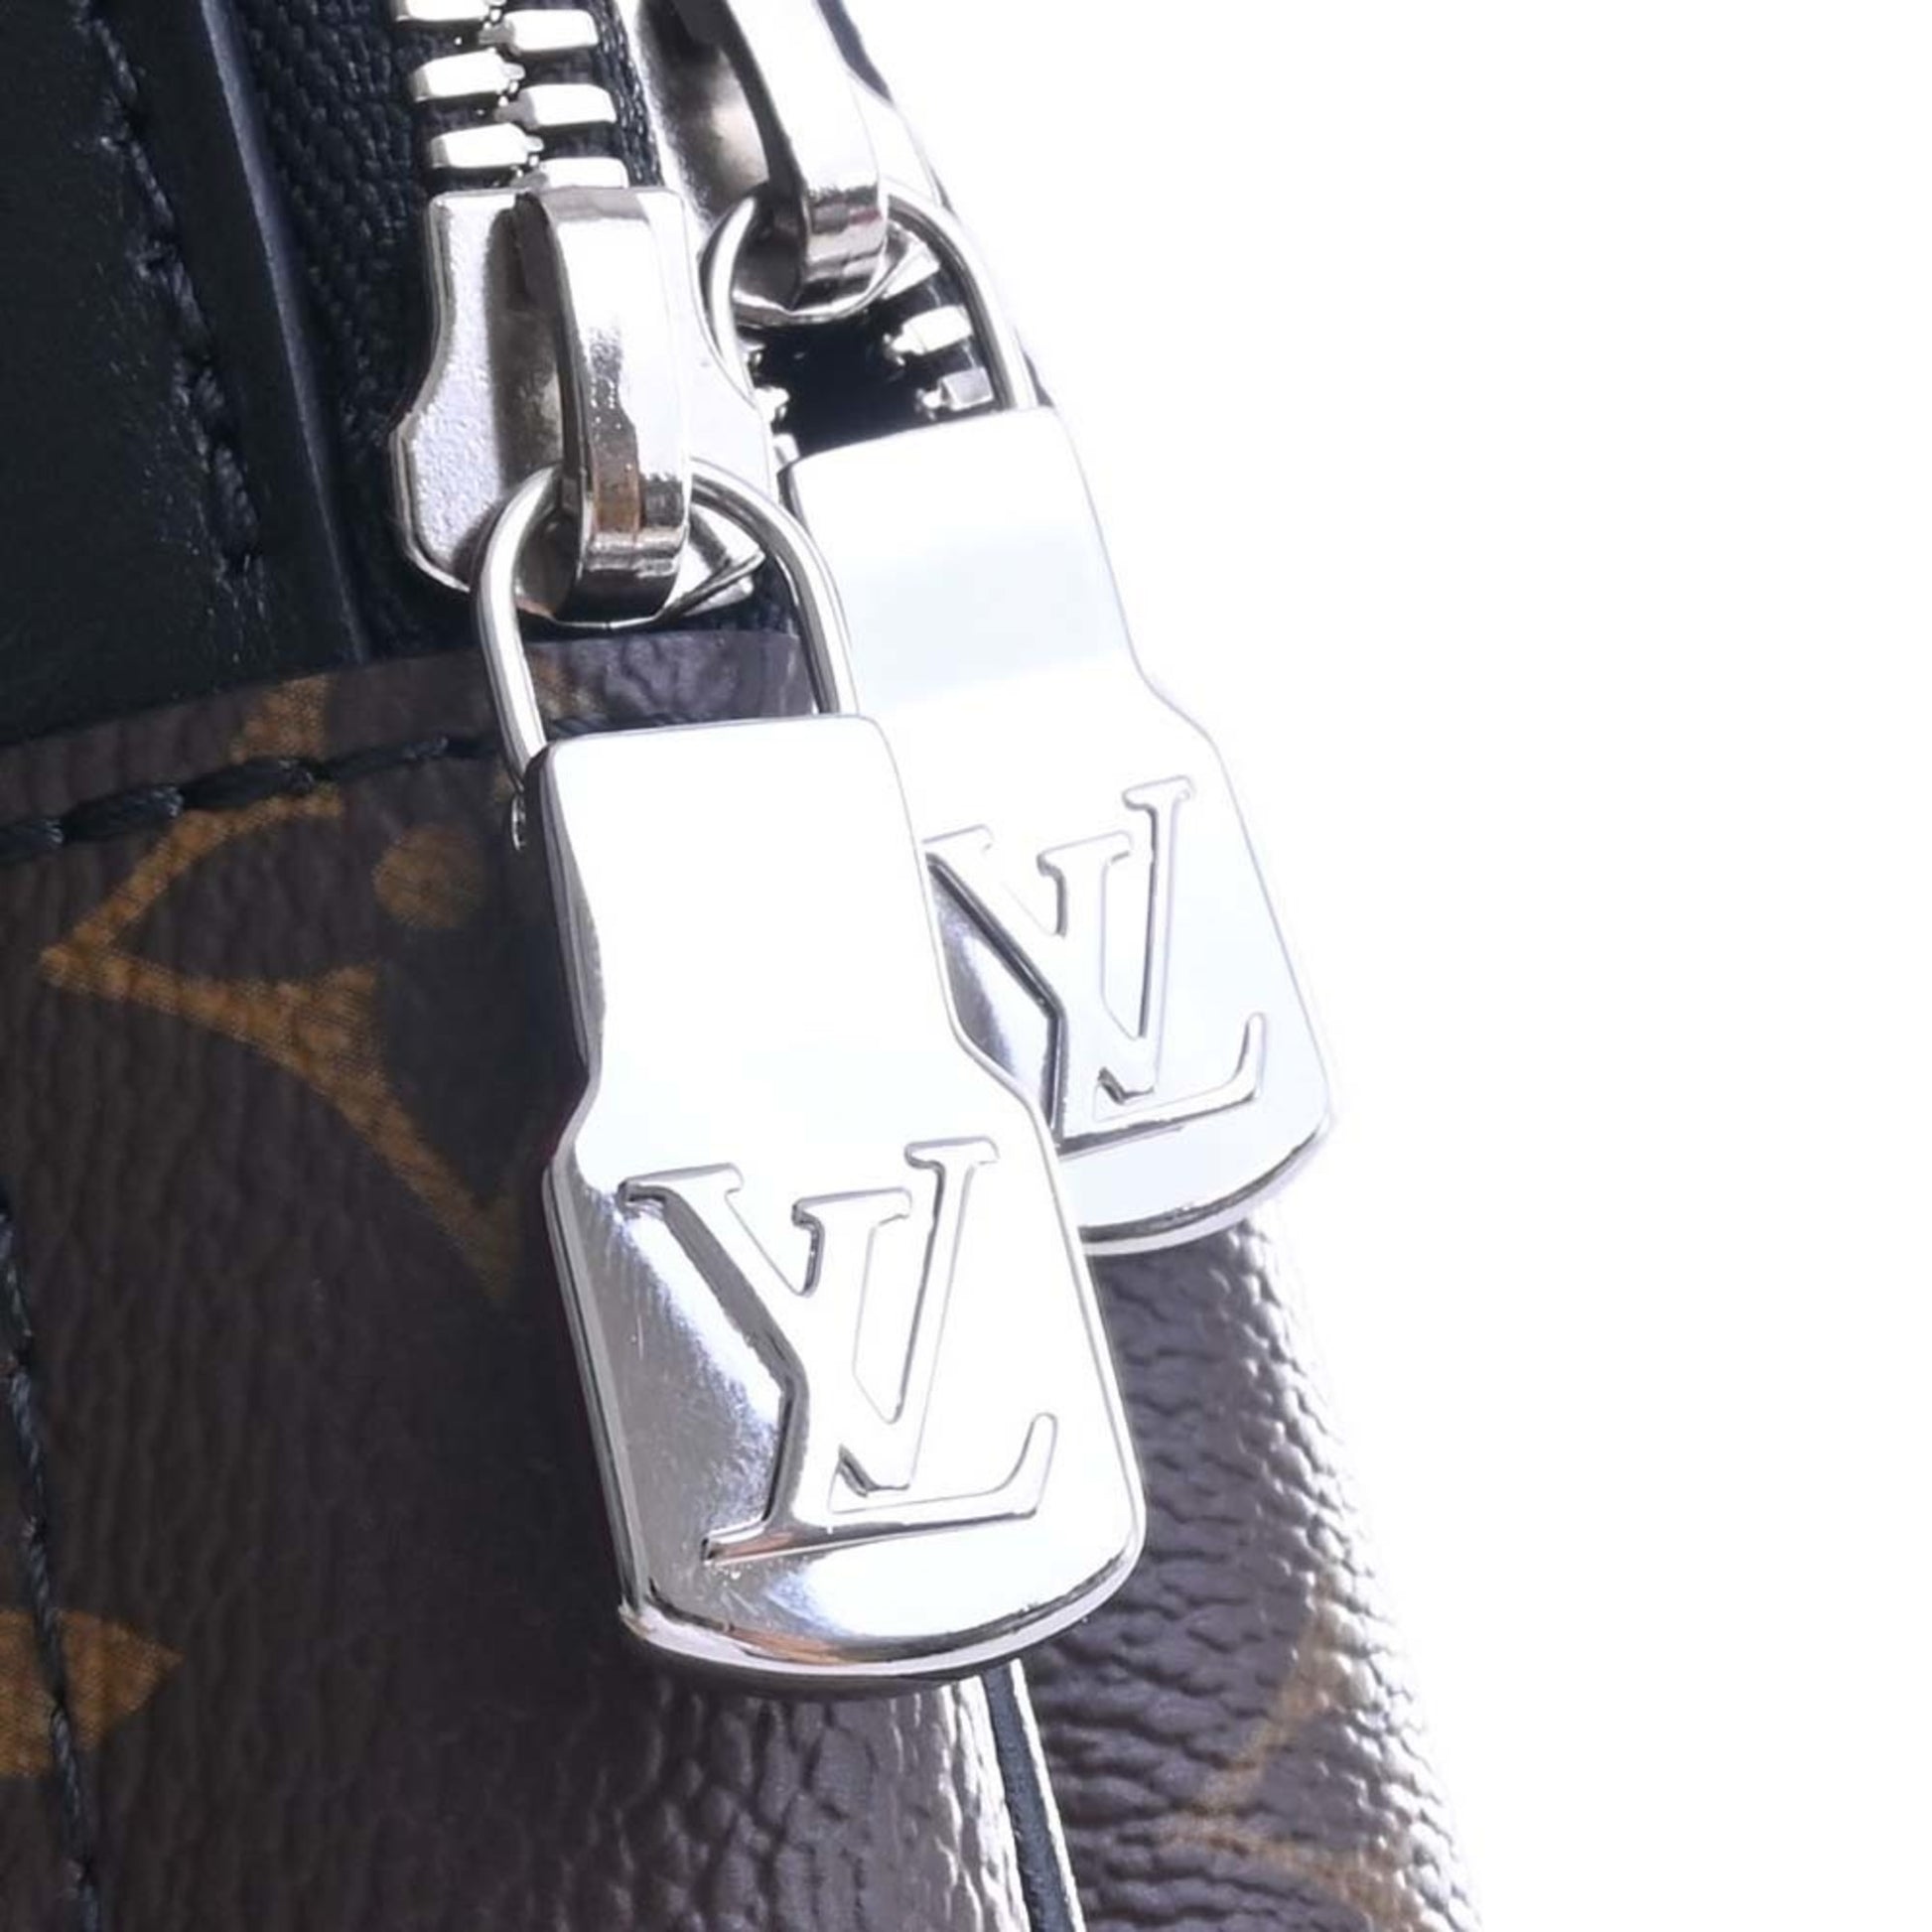 LOUIS VUITTON Louis Vuitton Monogram Macassar Avenue Sling Bag Body M46327  Brown Black Men's